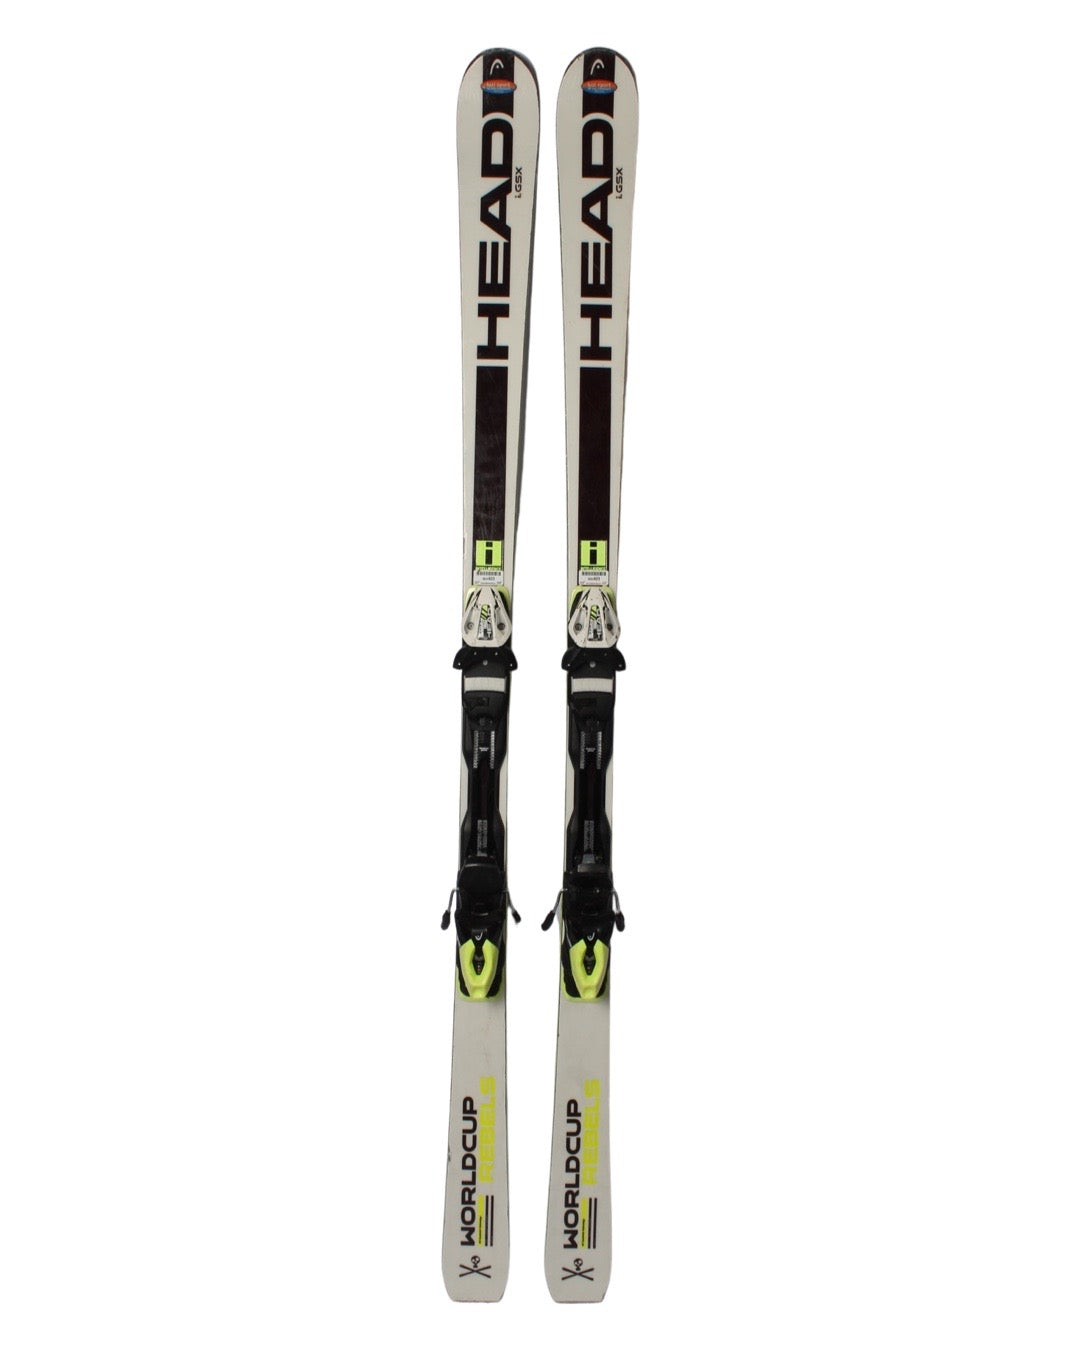 Ski - Head Worldcup Rebels i.GSX - 2299 kr